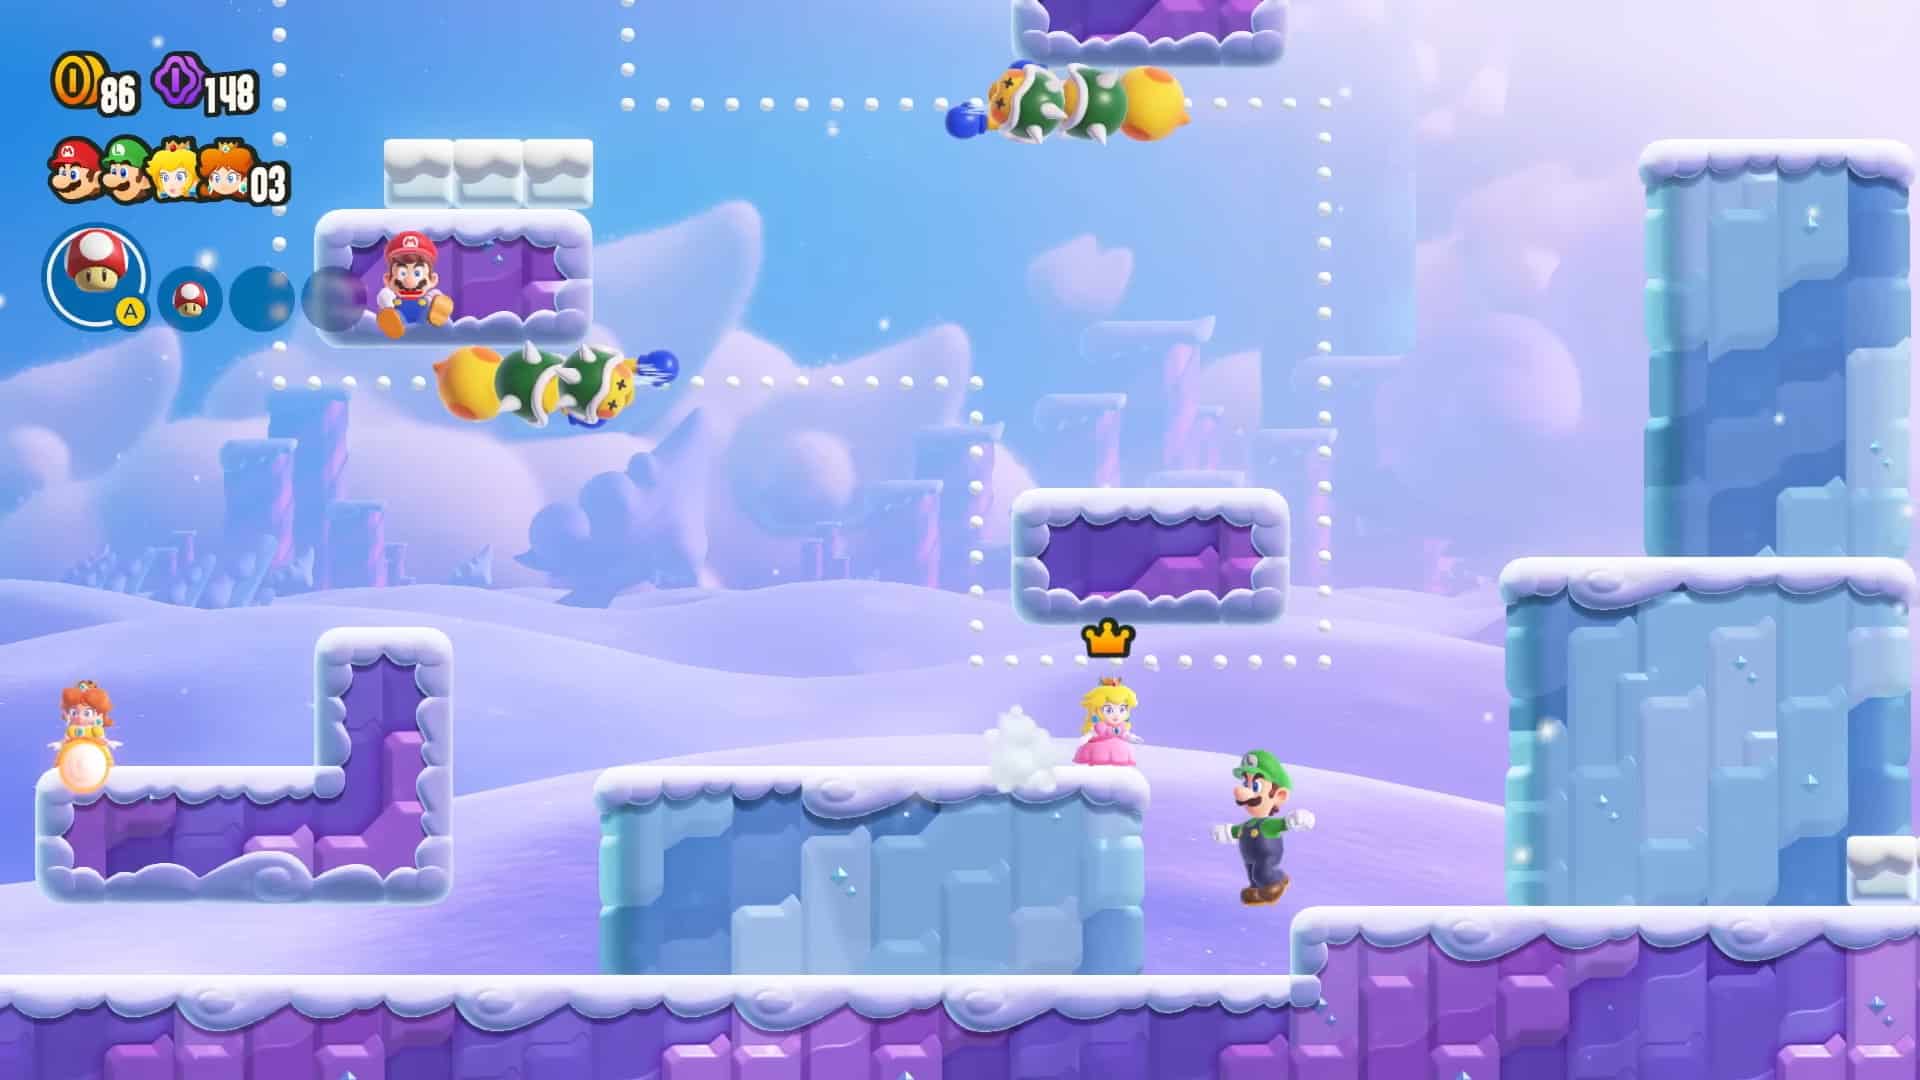 Super Mario Bros. Wonder: Official Gameplay Trailer